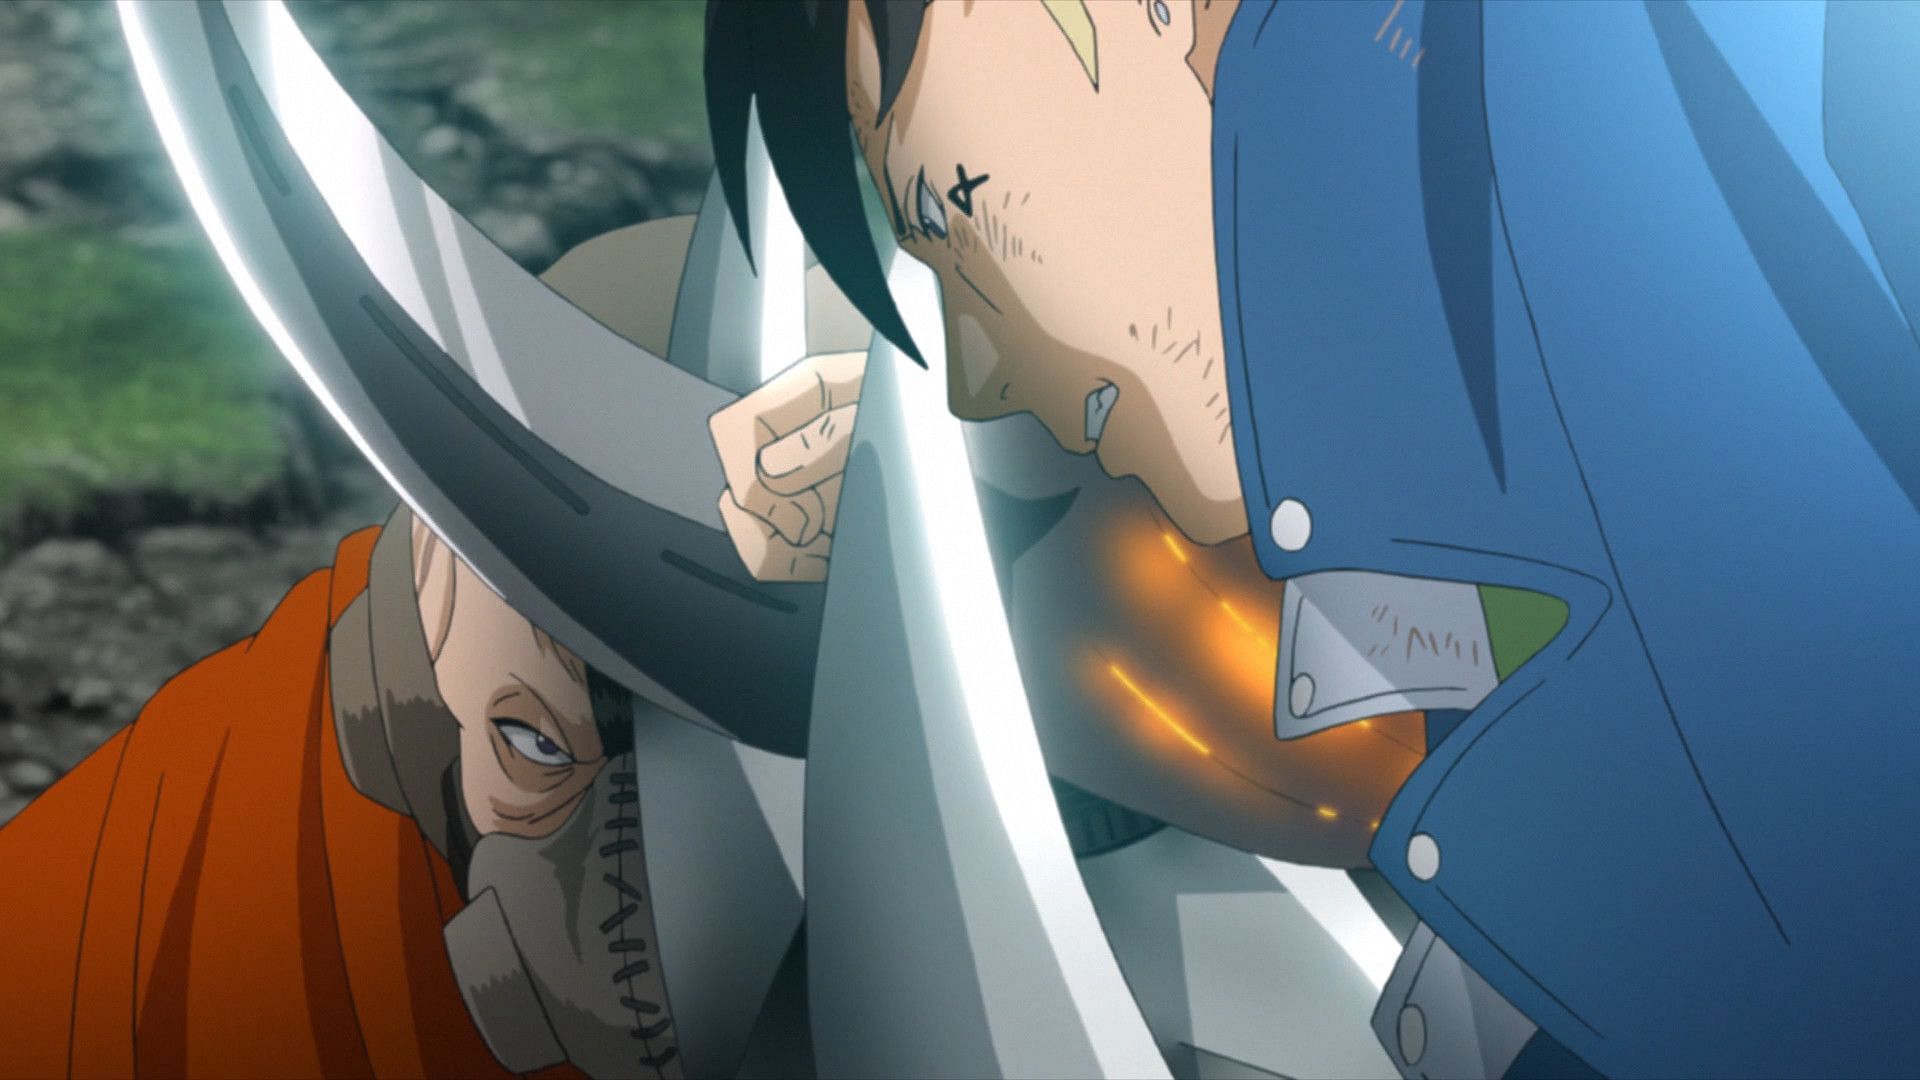 Kawaki vs Garou as seen in the anime (image via Studio Pierrot)